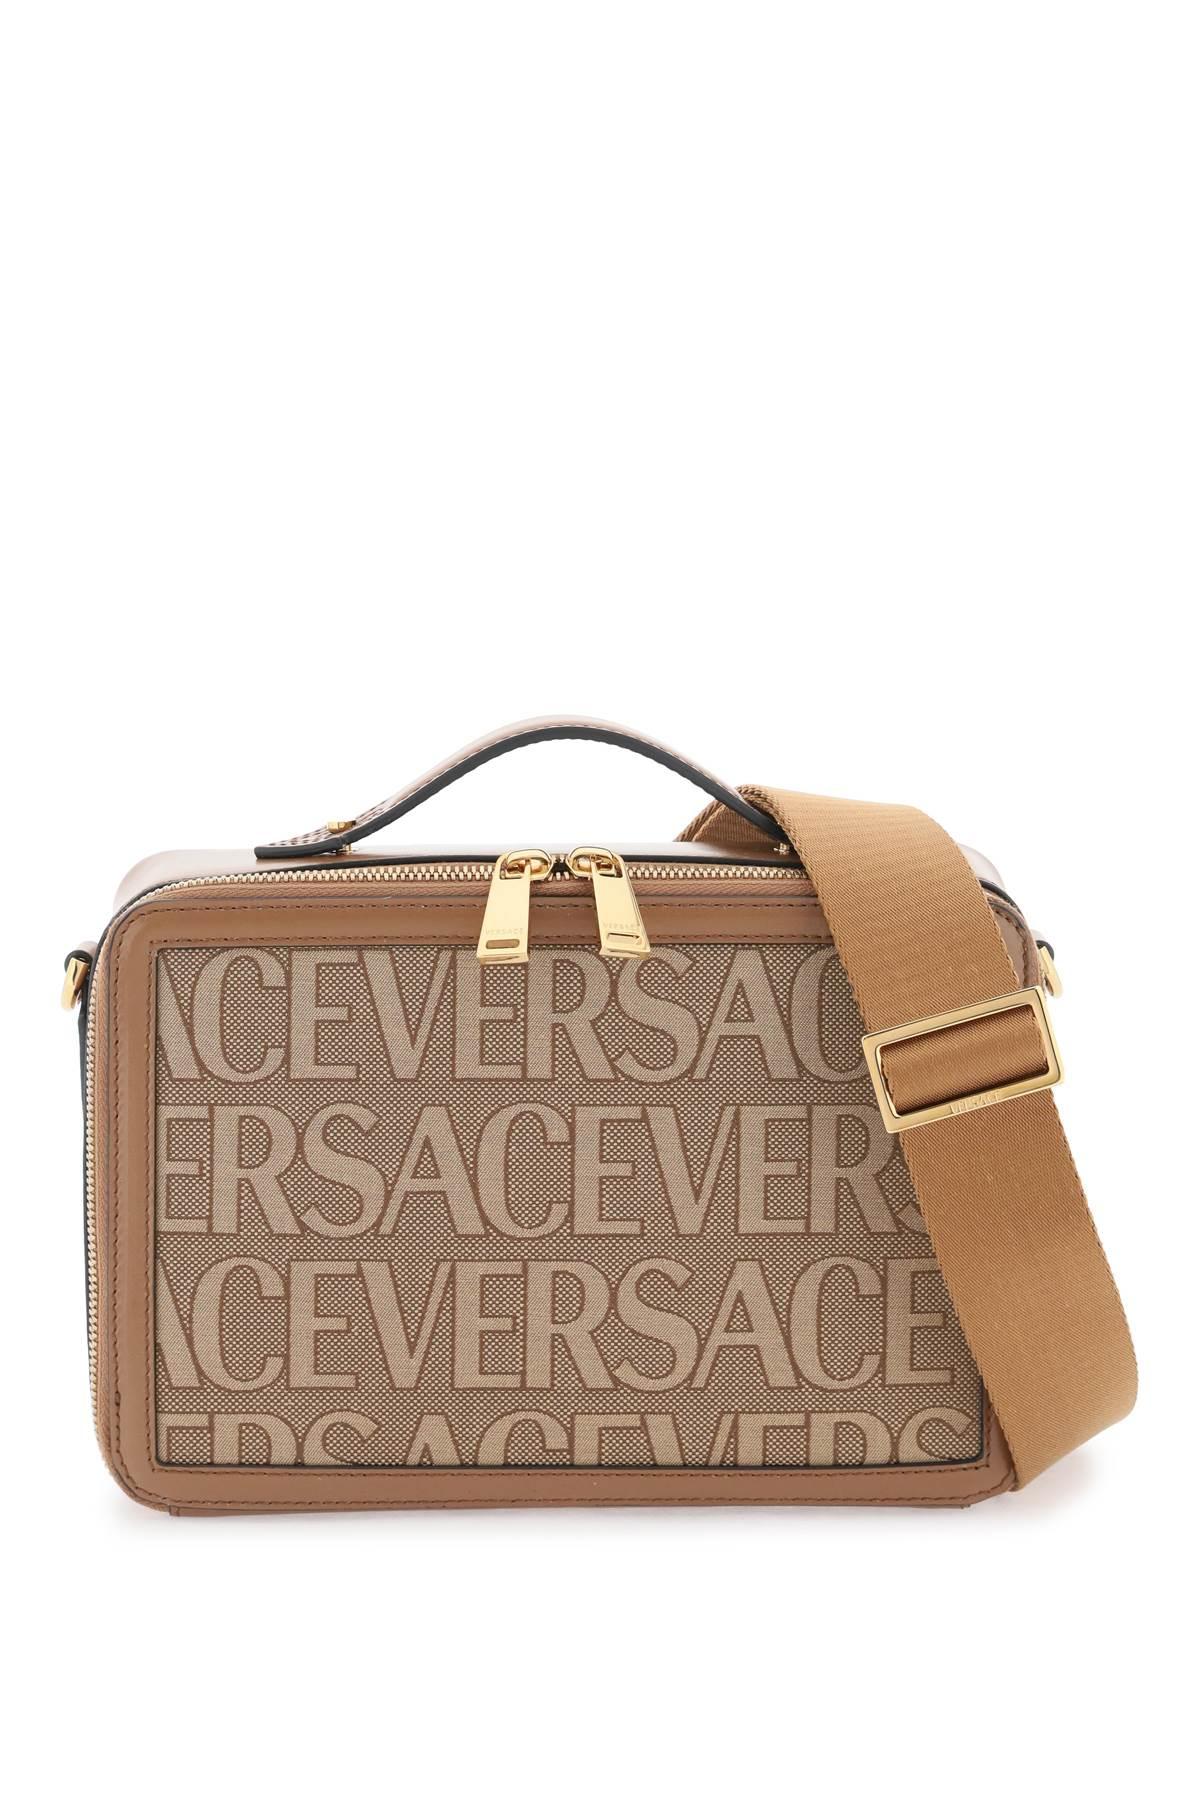 Versace Crossbody & Messenger Bags for Men